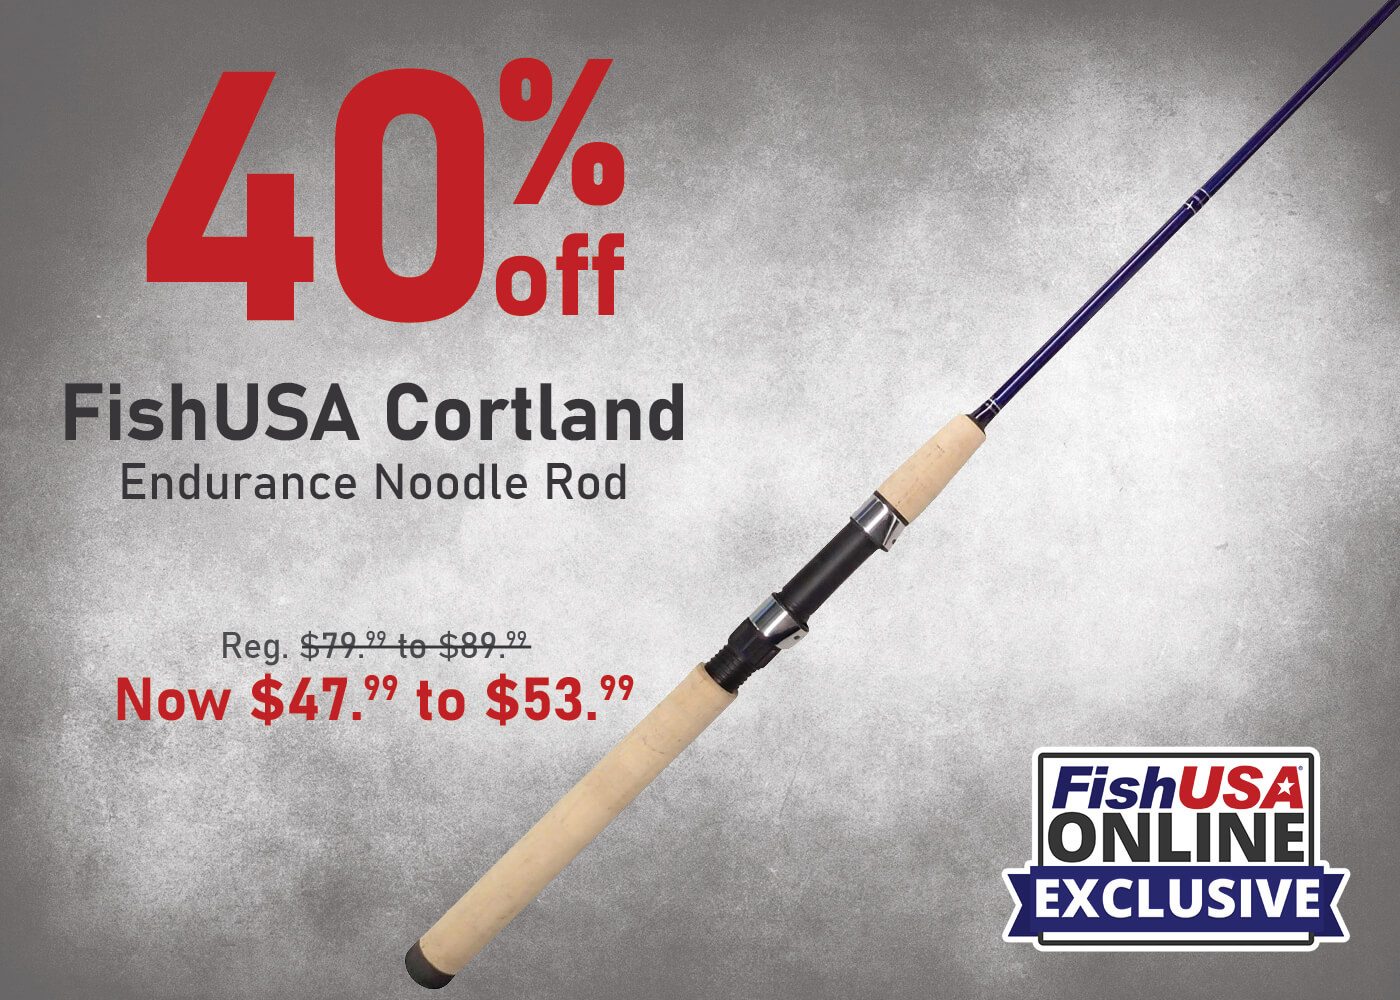 Take 40% off the FishUSA Cortland Endurance Noodle Rod